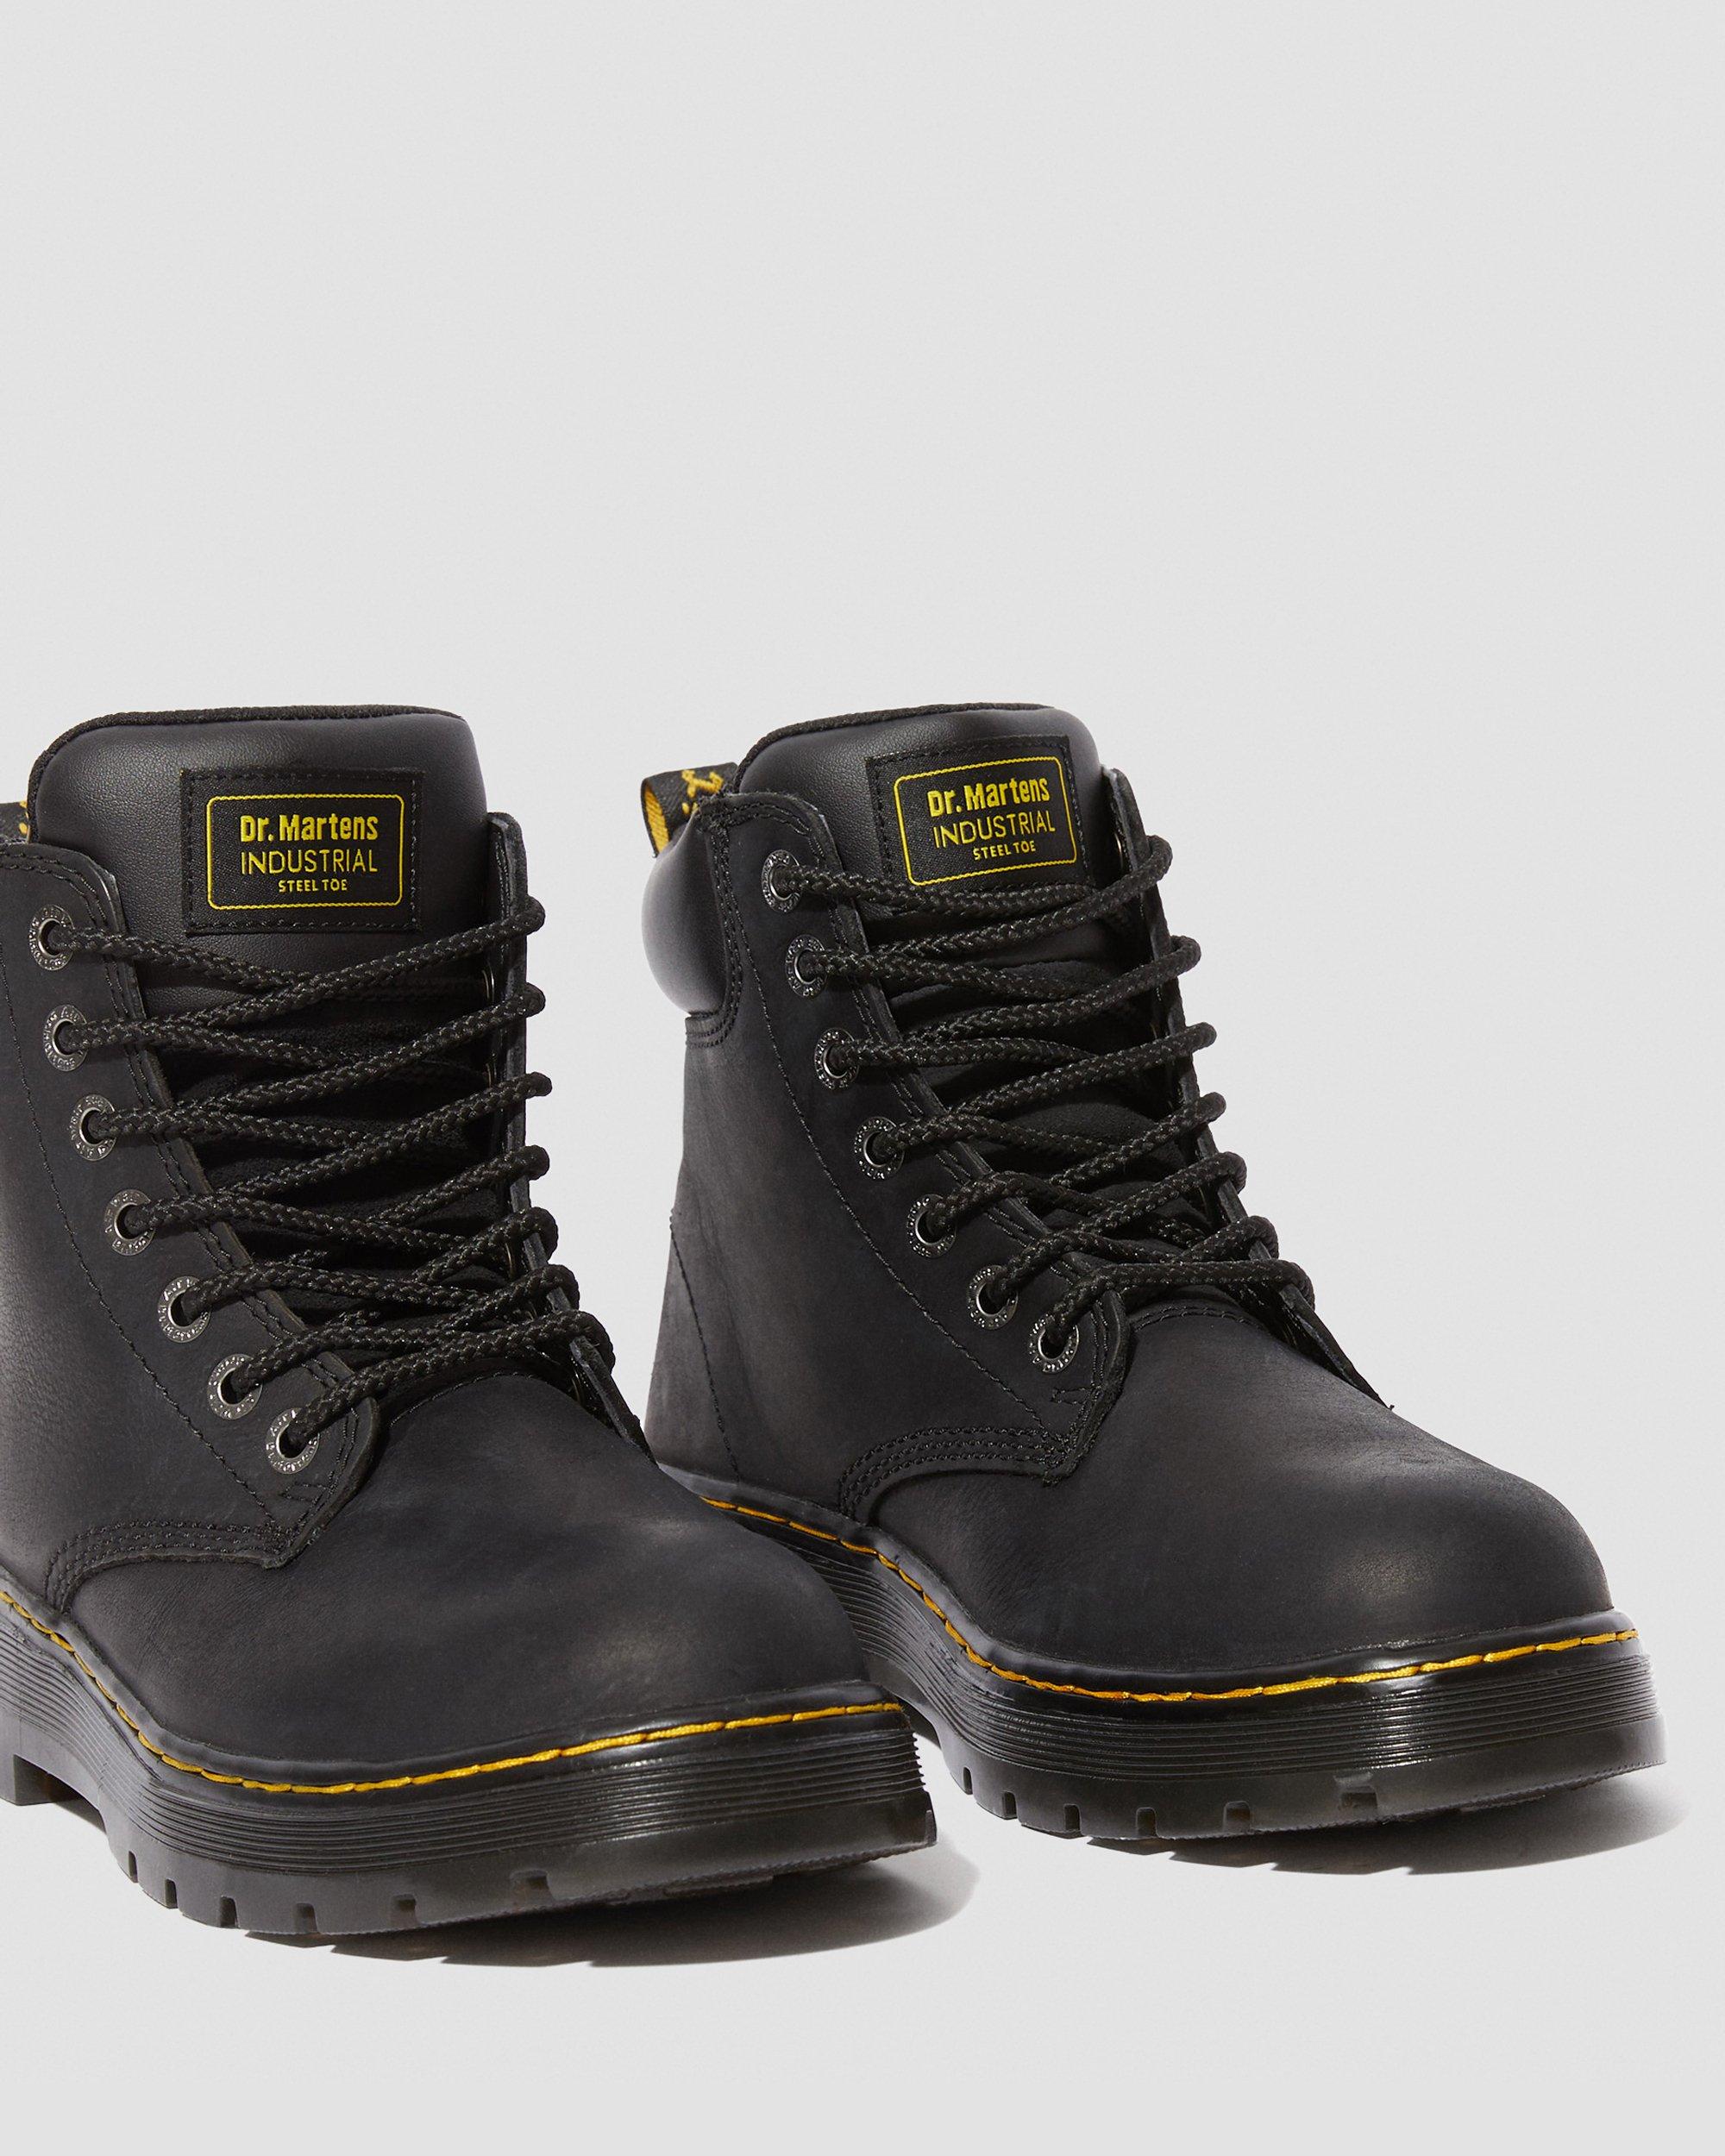 https://i1.adis.ws/i/drmartens/16257001.89.jpg?$large$Winch Steel Toe Work Boots Dr. Martens